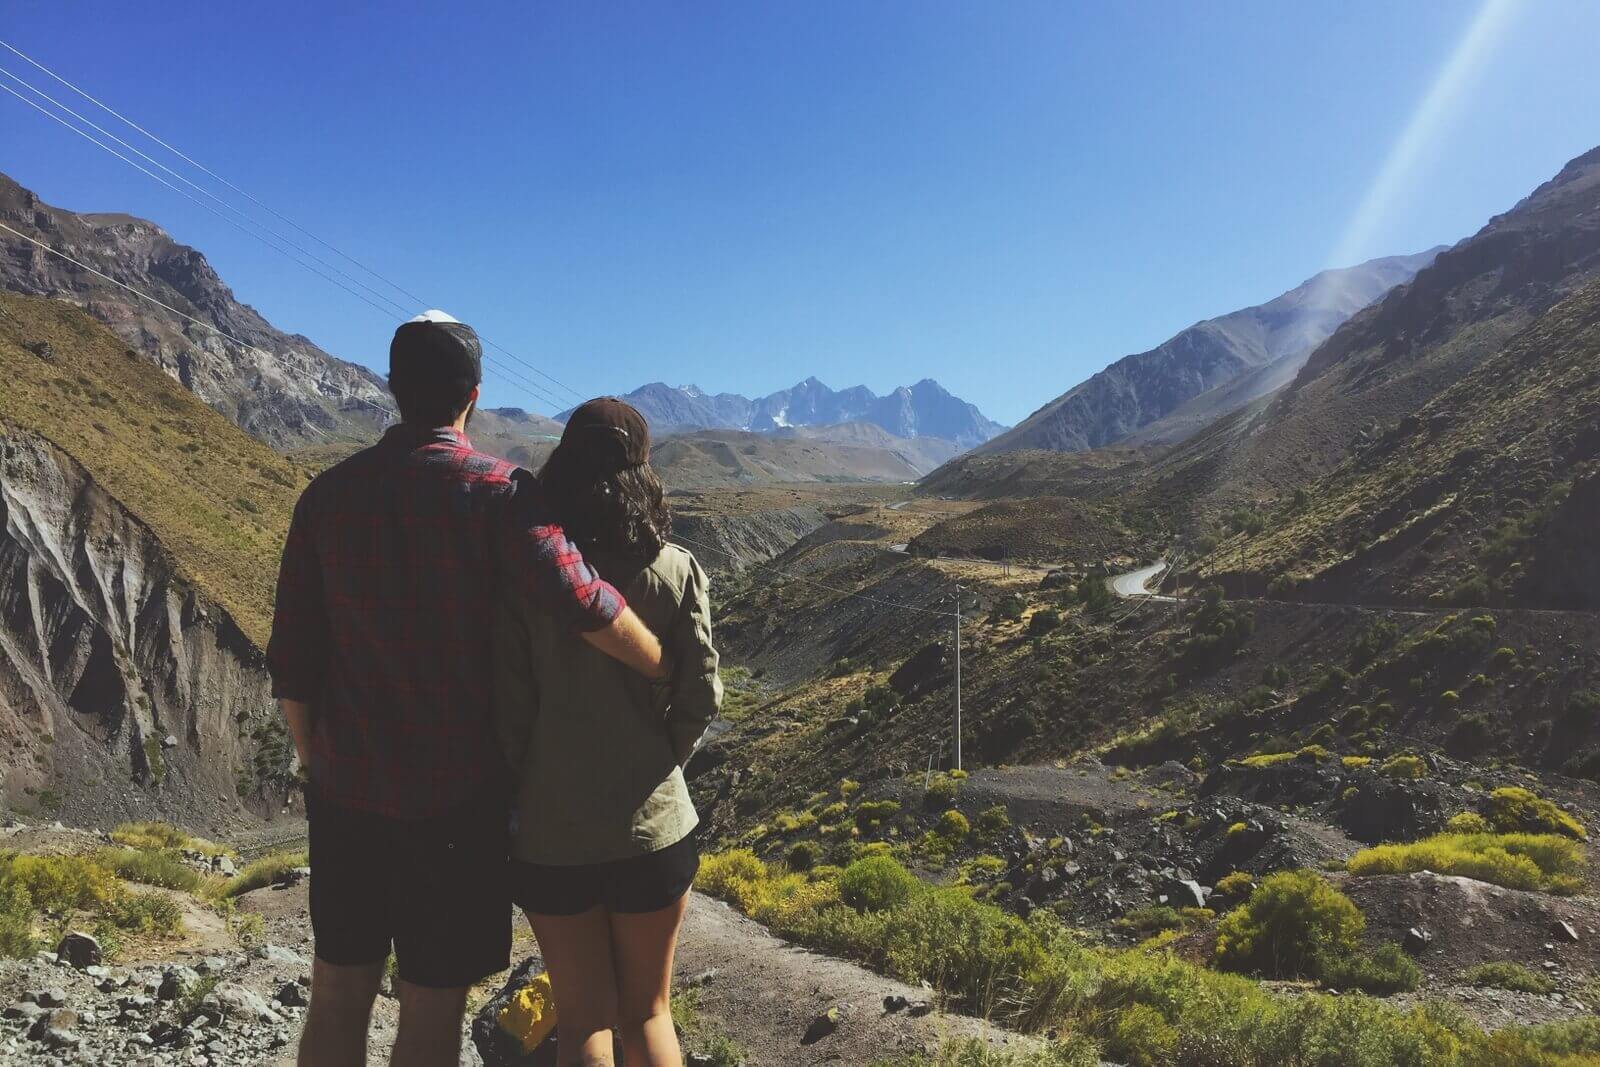 Beloved Carina & I at the monumental Cajon del Maipo mountains.